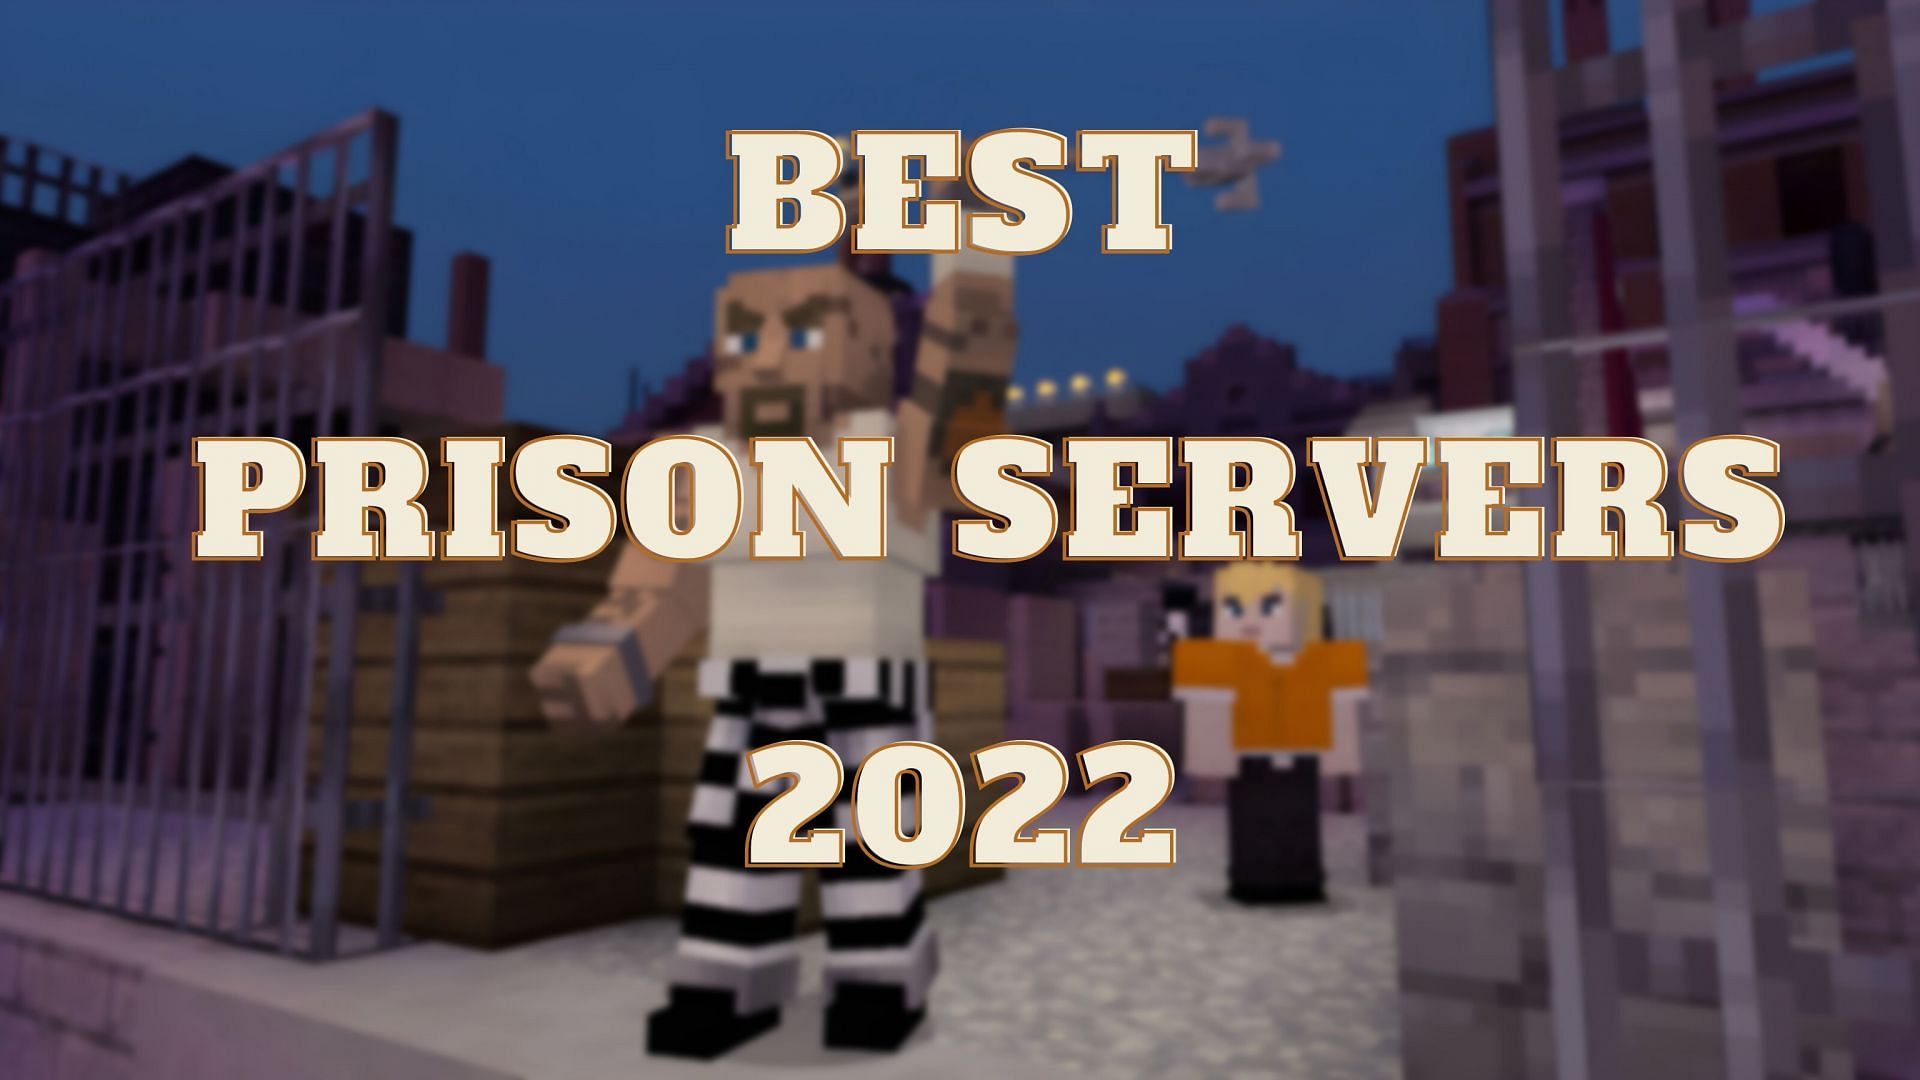 Prison servers are an incredibly popular choice among fans (Image via Sportskeeda)